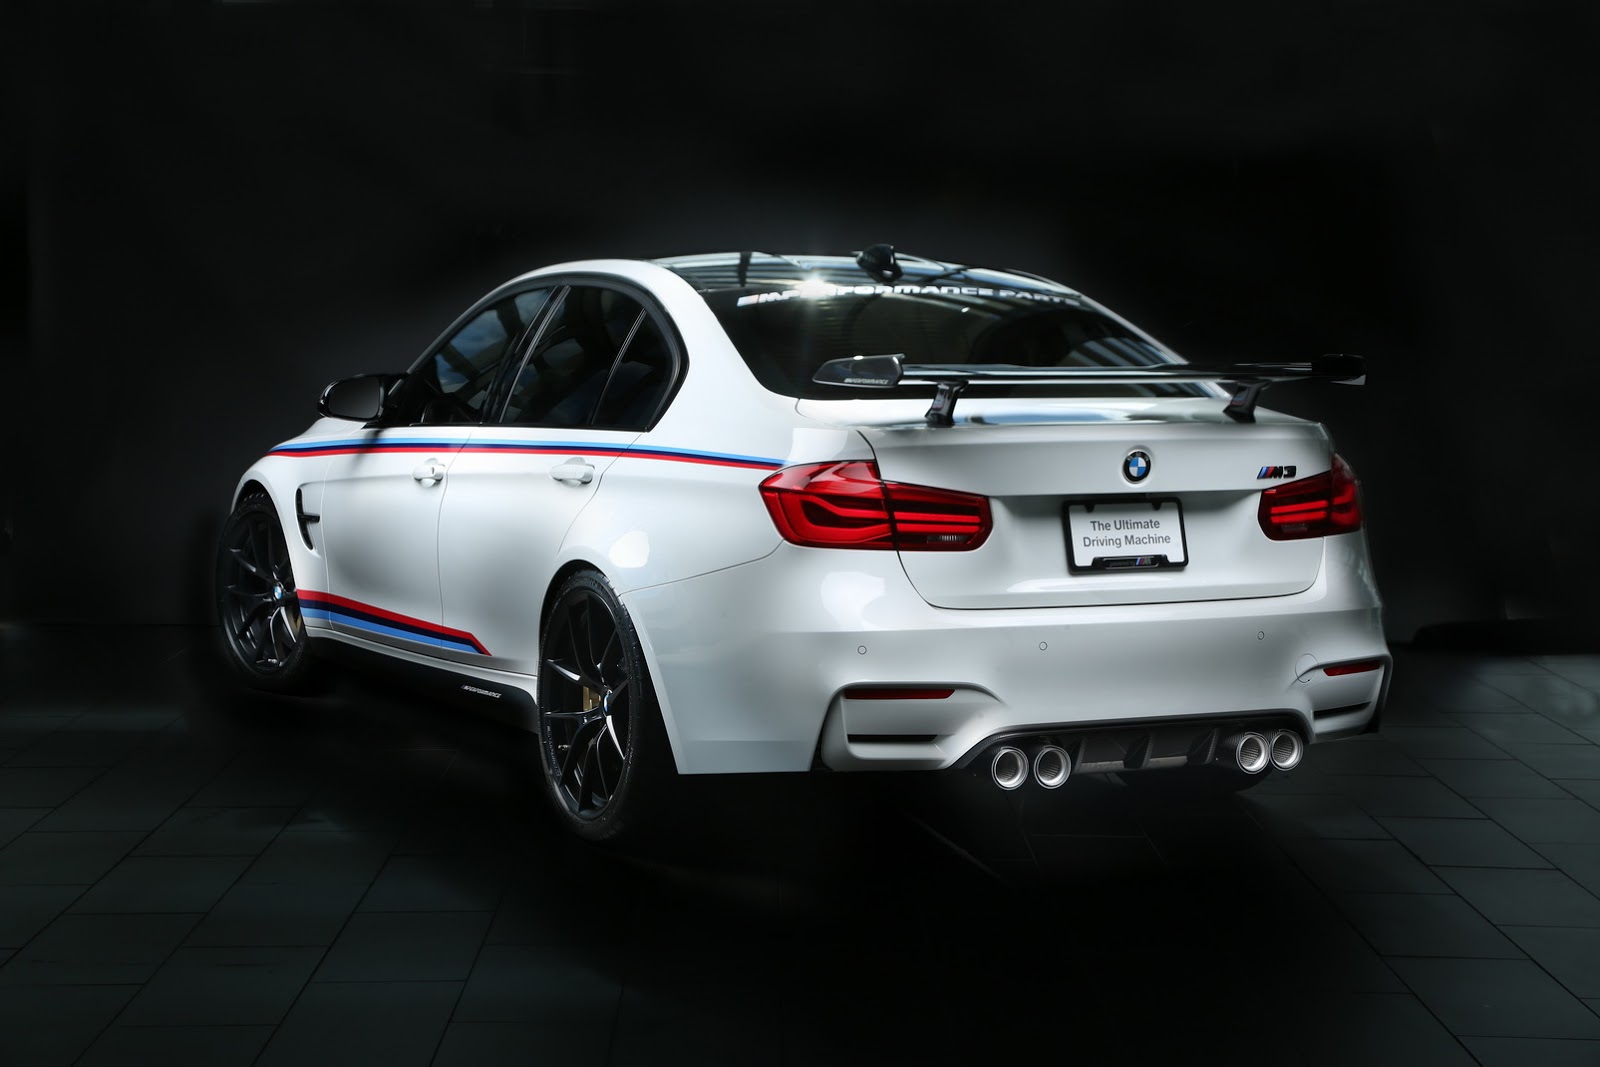 BMW M Performance Parts